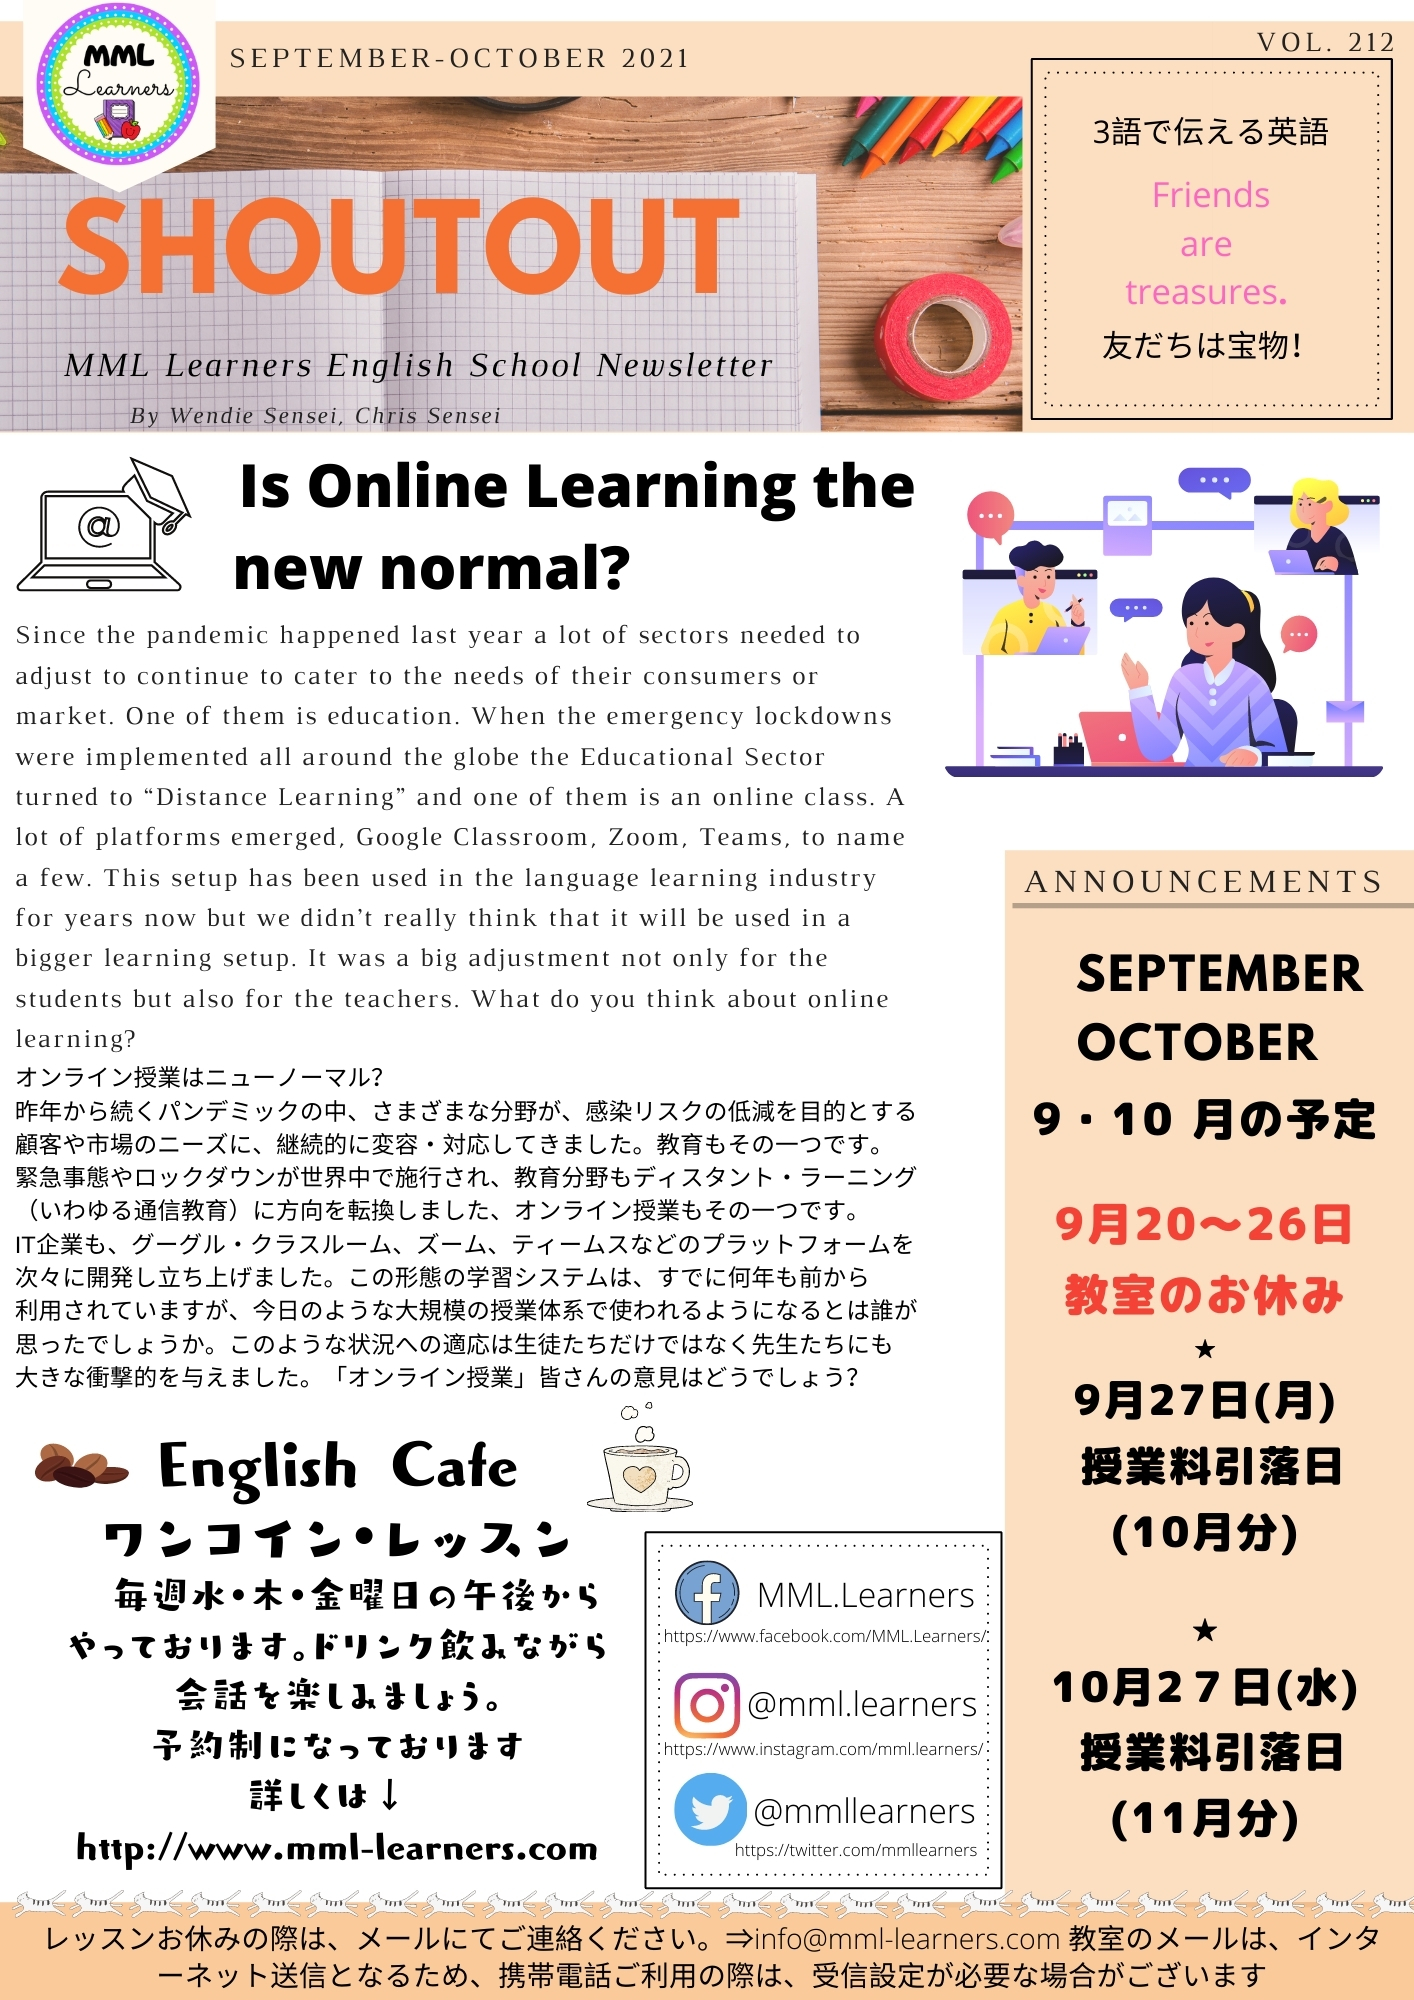 http://www.mml-learners.com/school/news/MML%20Newsletter.jpg